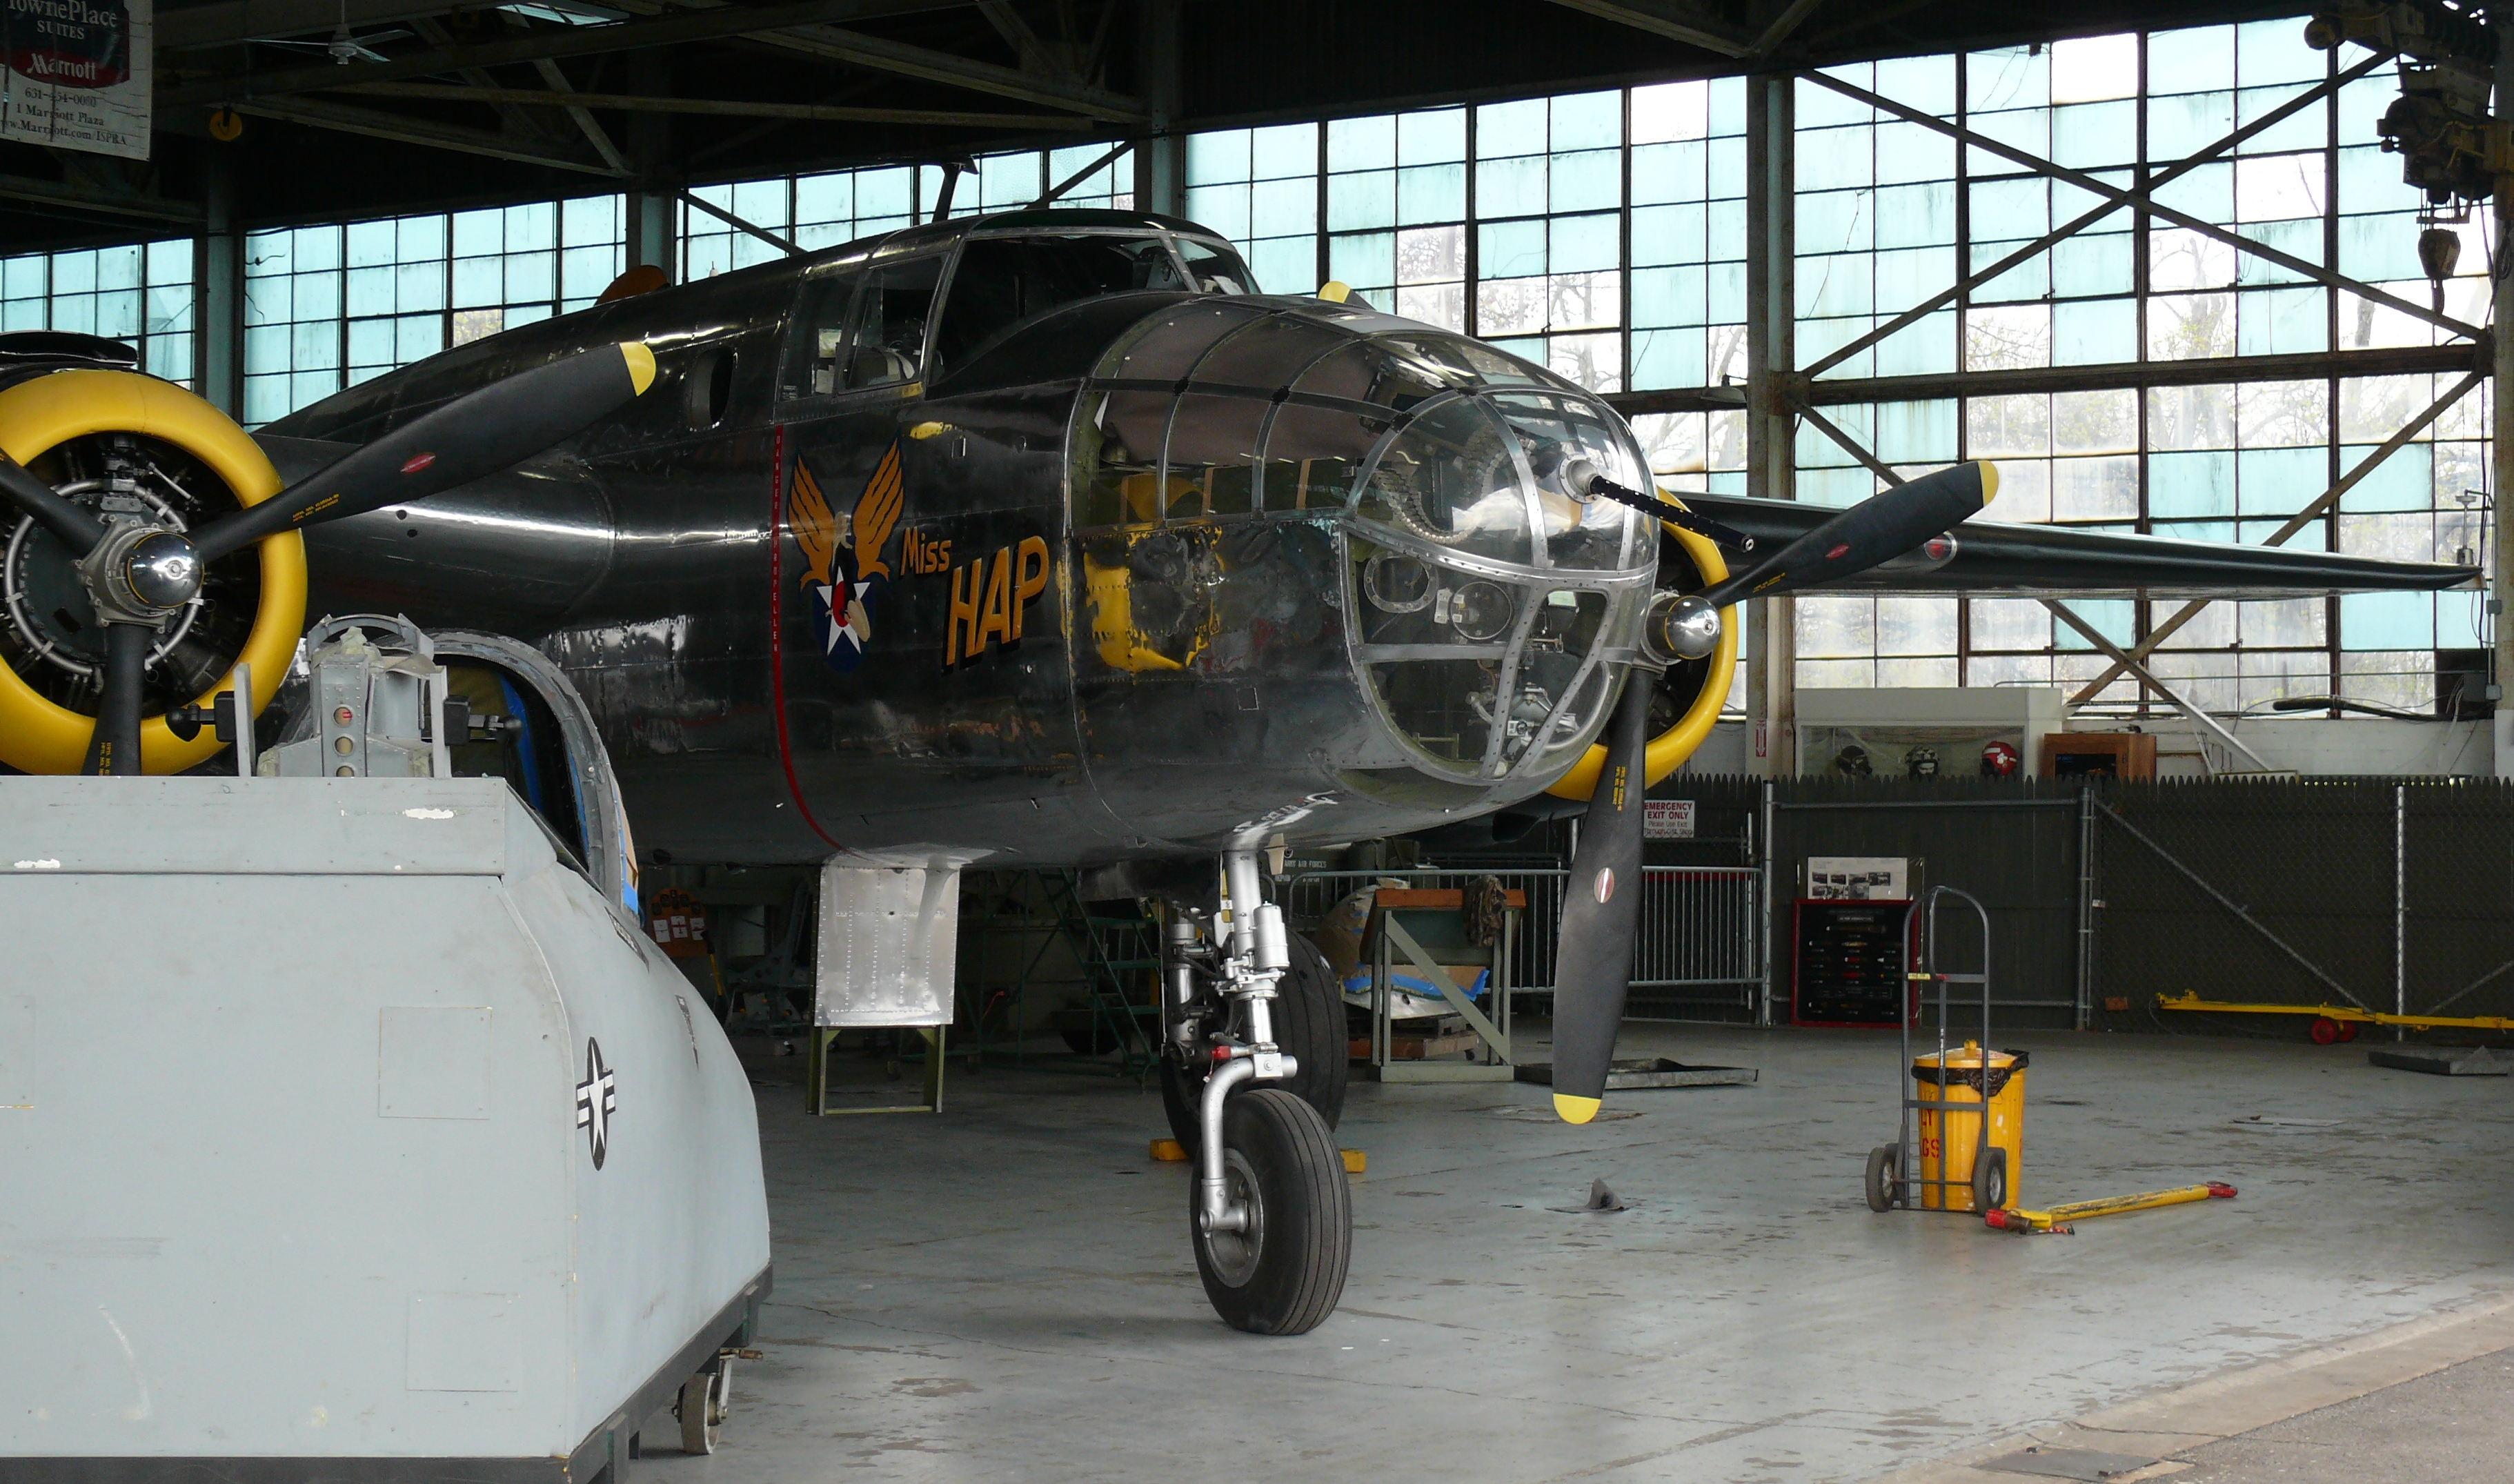 American Airpower Museum Activities